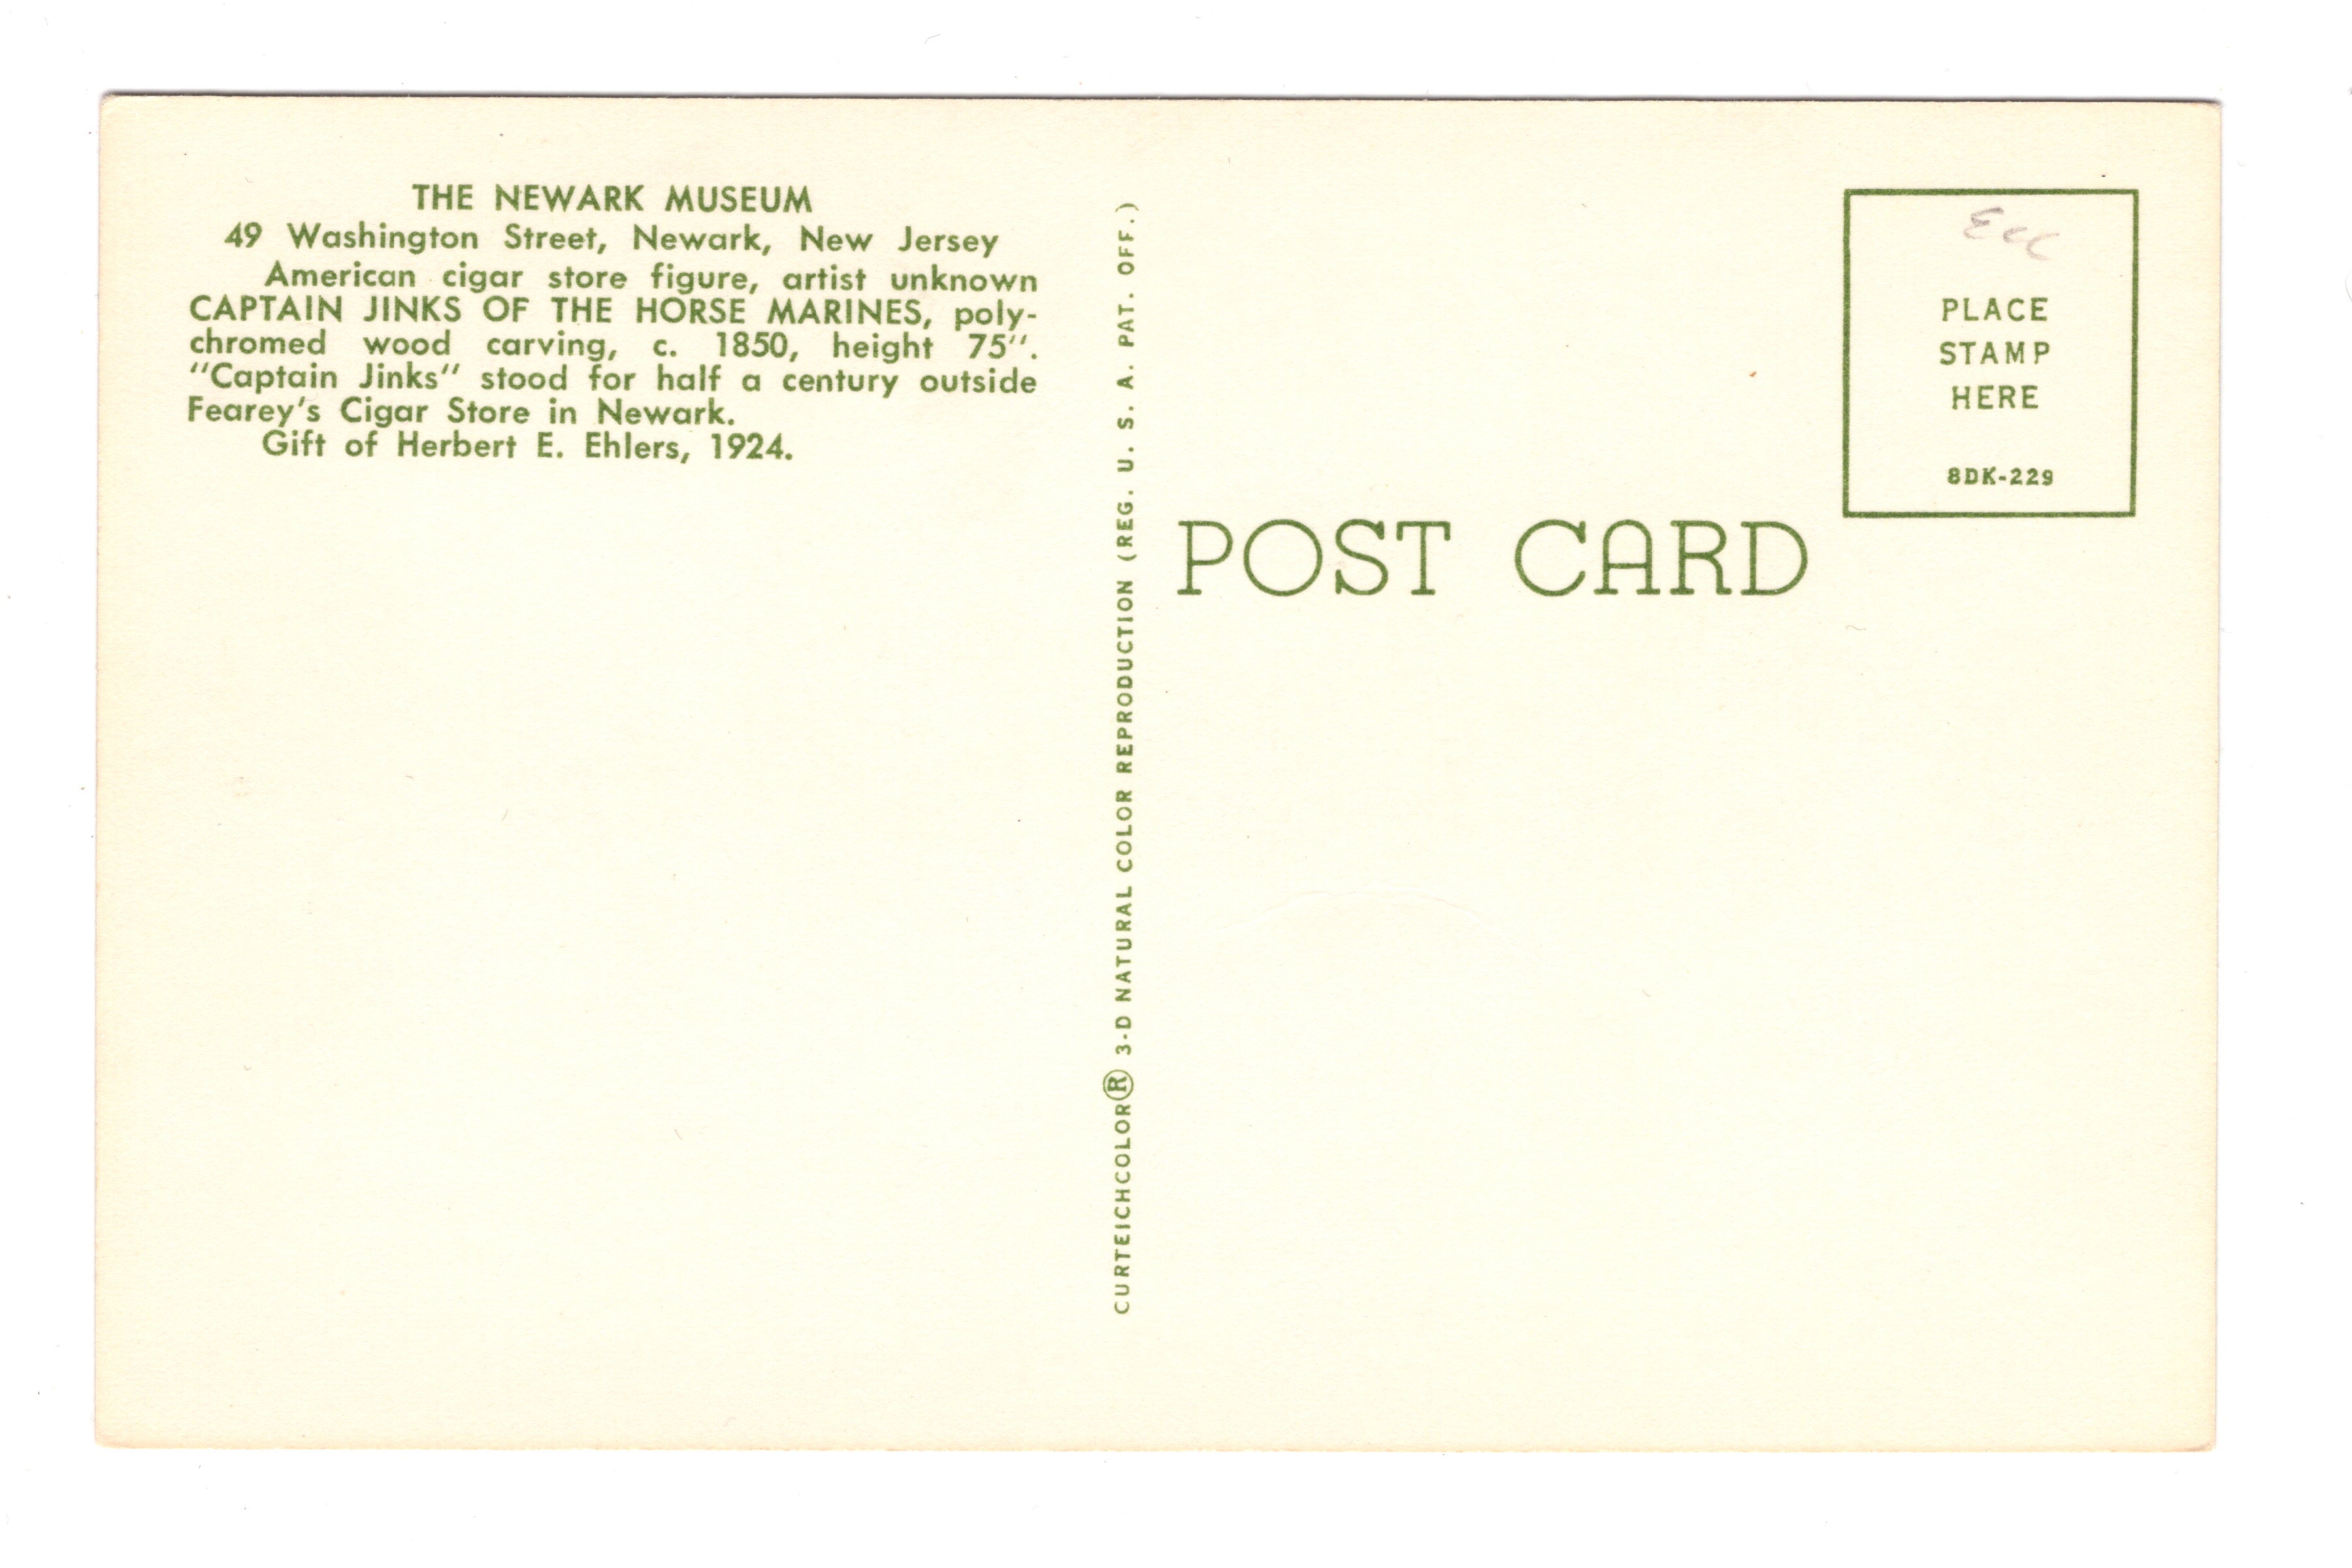 The Newark Museum, Washington Street, Vintage Post Card.